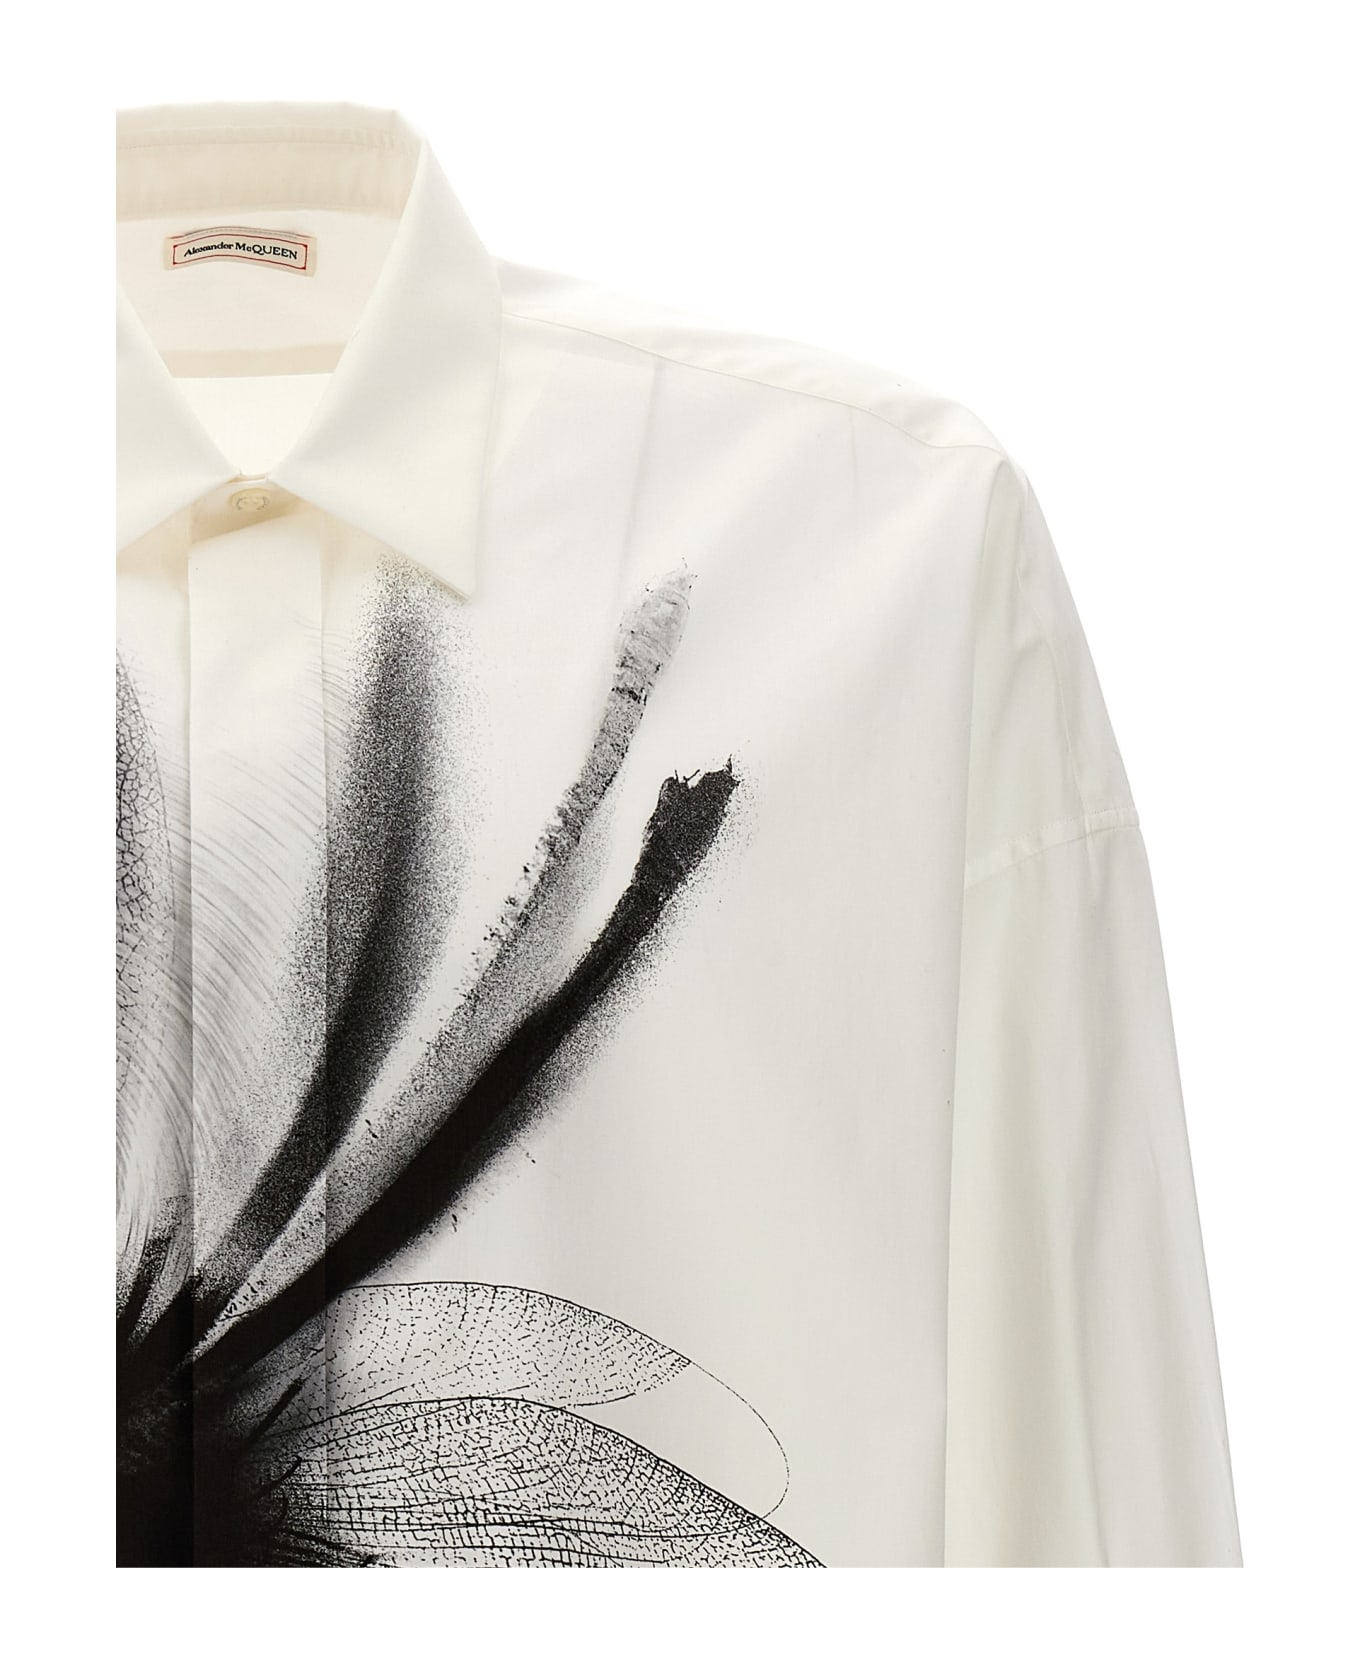 Alexander McQueen Printed Shirt - White/Black シャツ